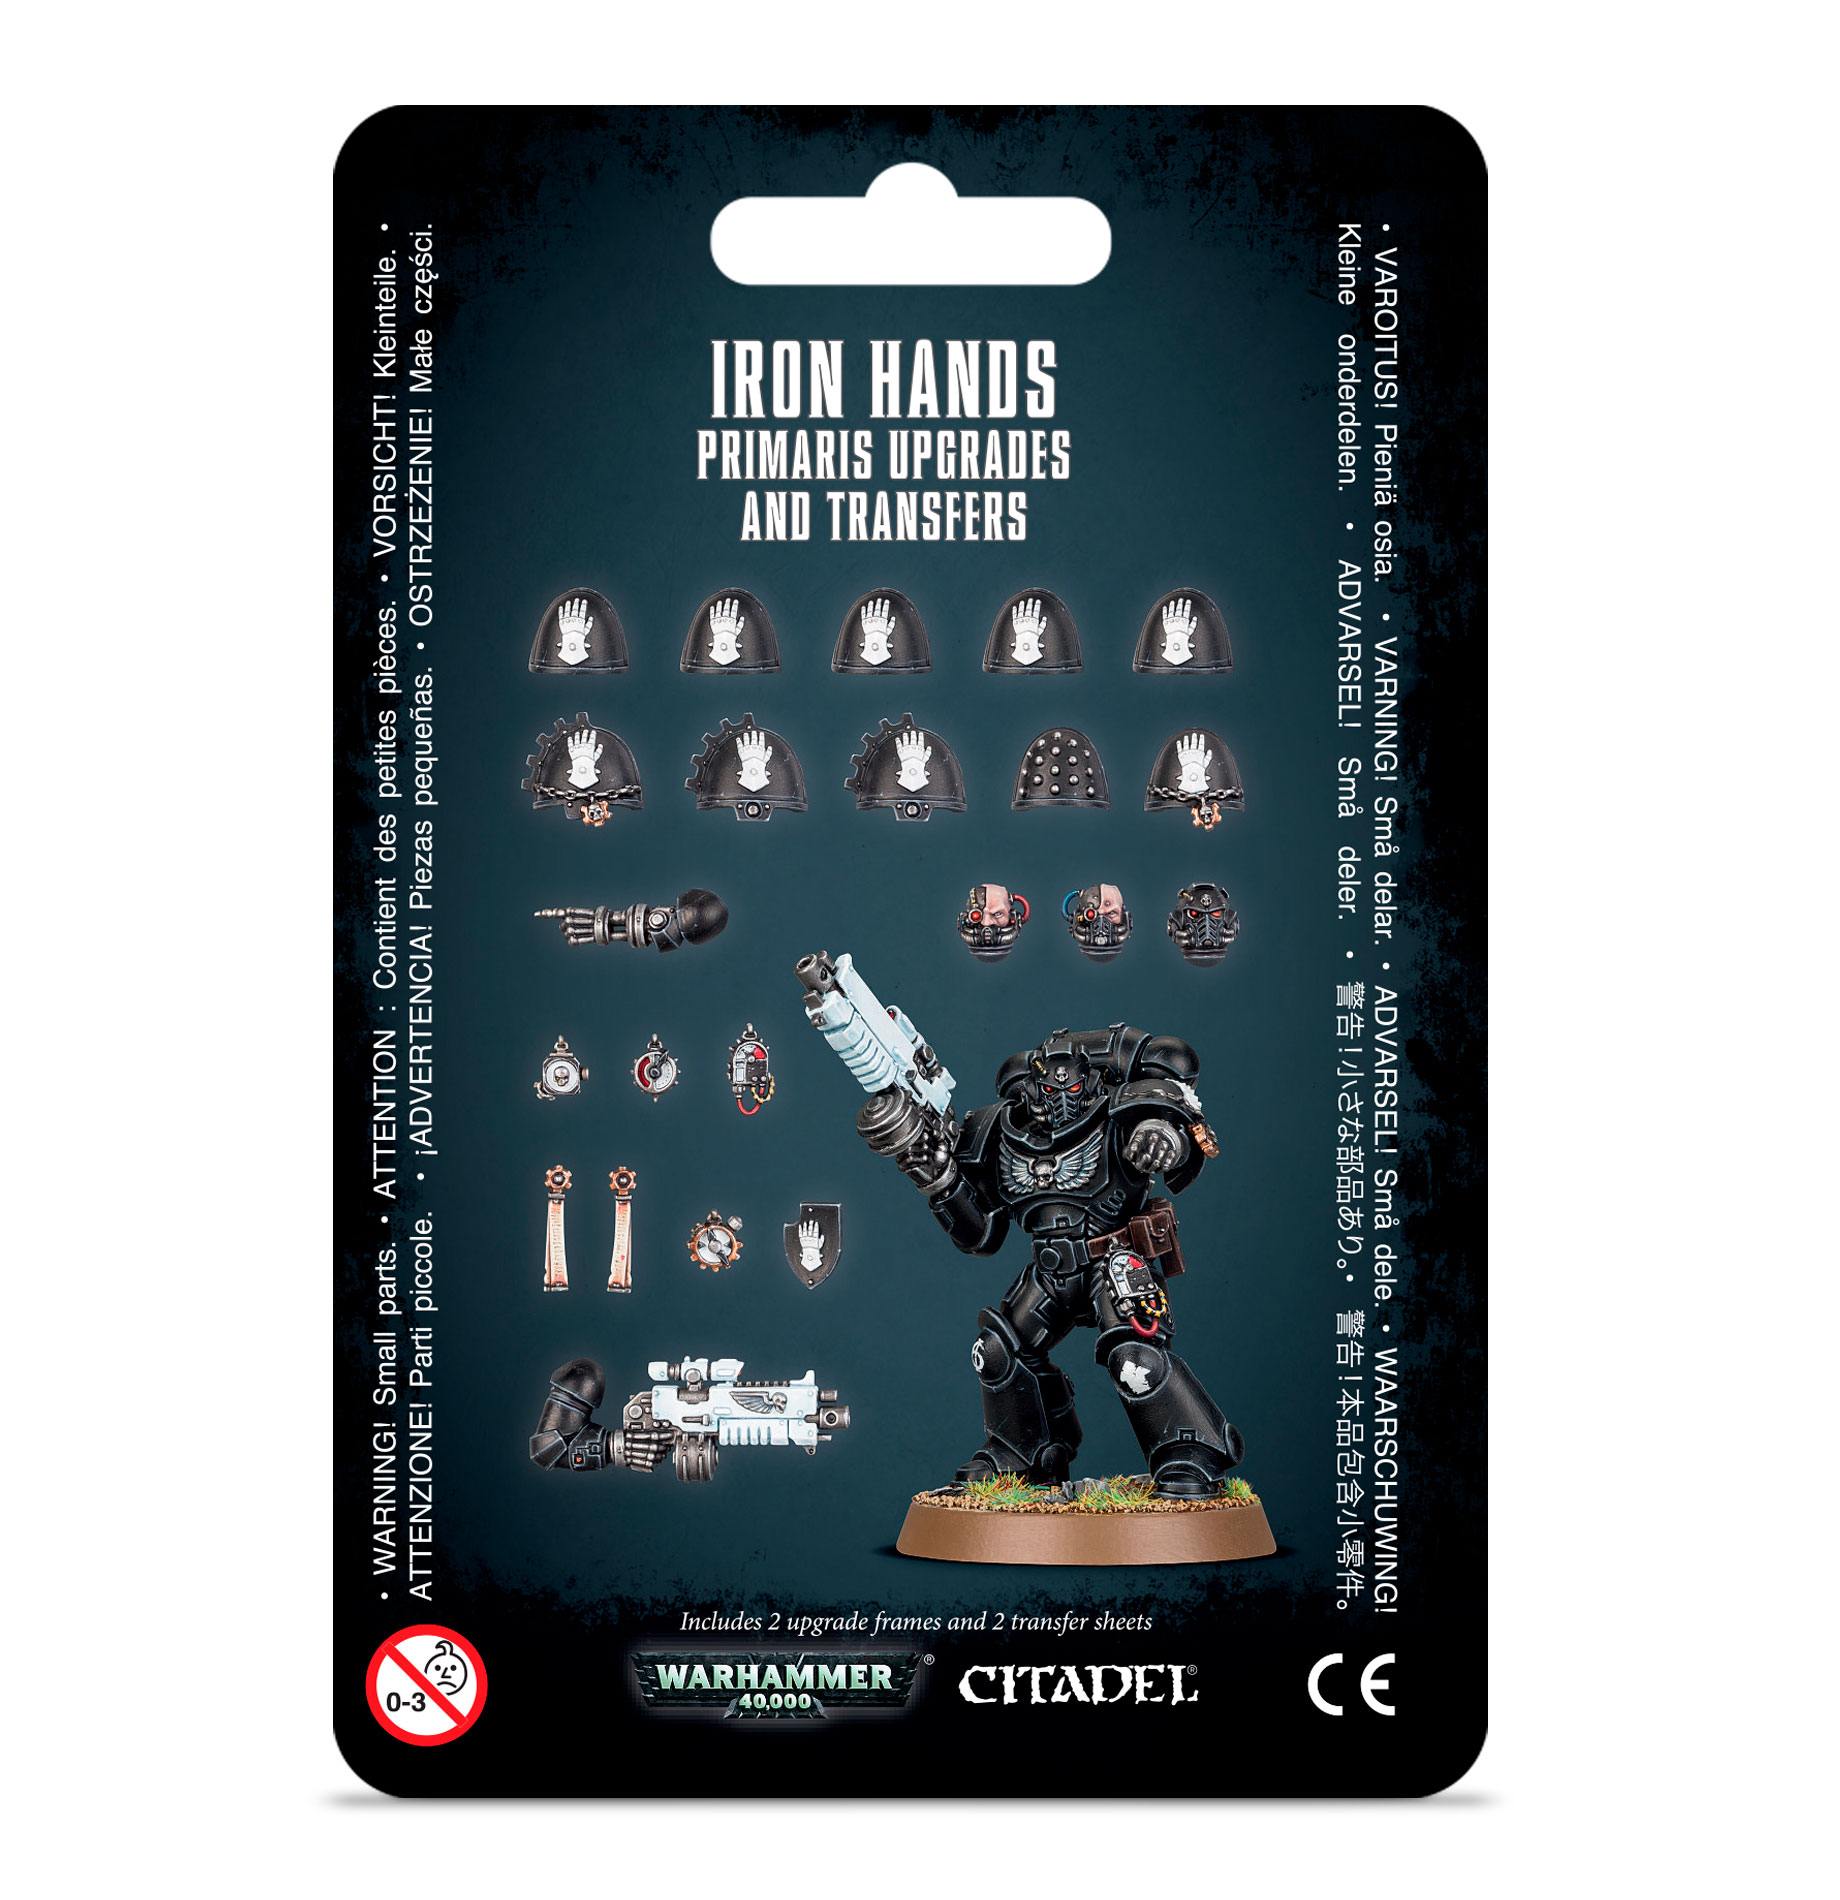 Iron Hands Primaris Upgrades